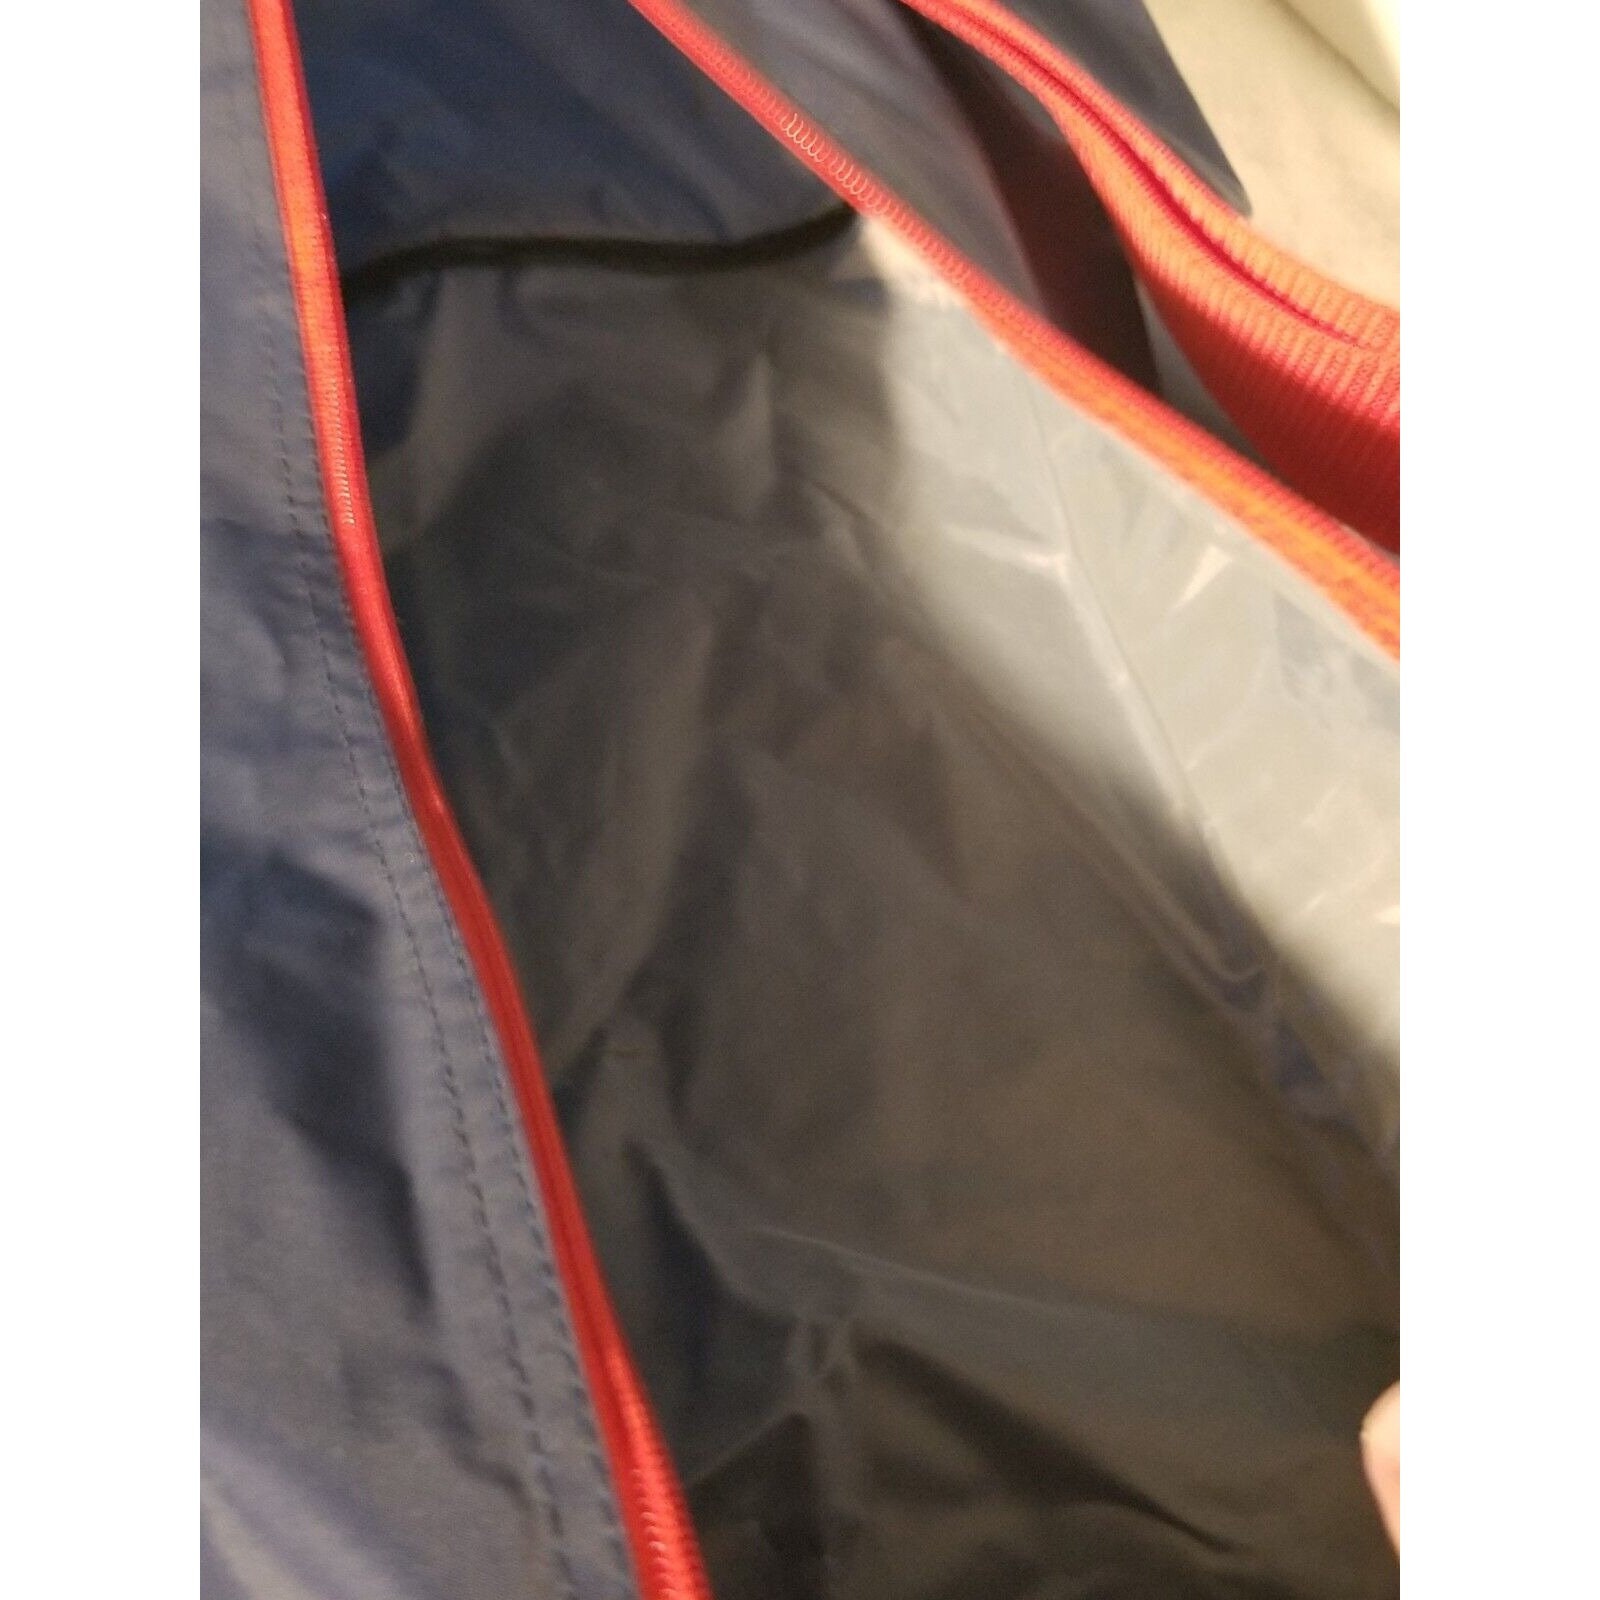 VTG St Louis Cardinals Duffel Bag Gym Bag Overnight Bag 20x10x10